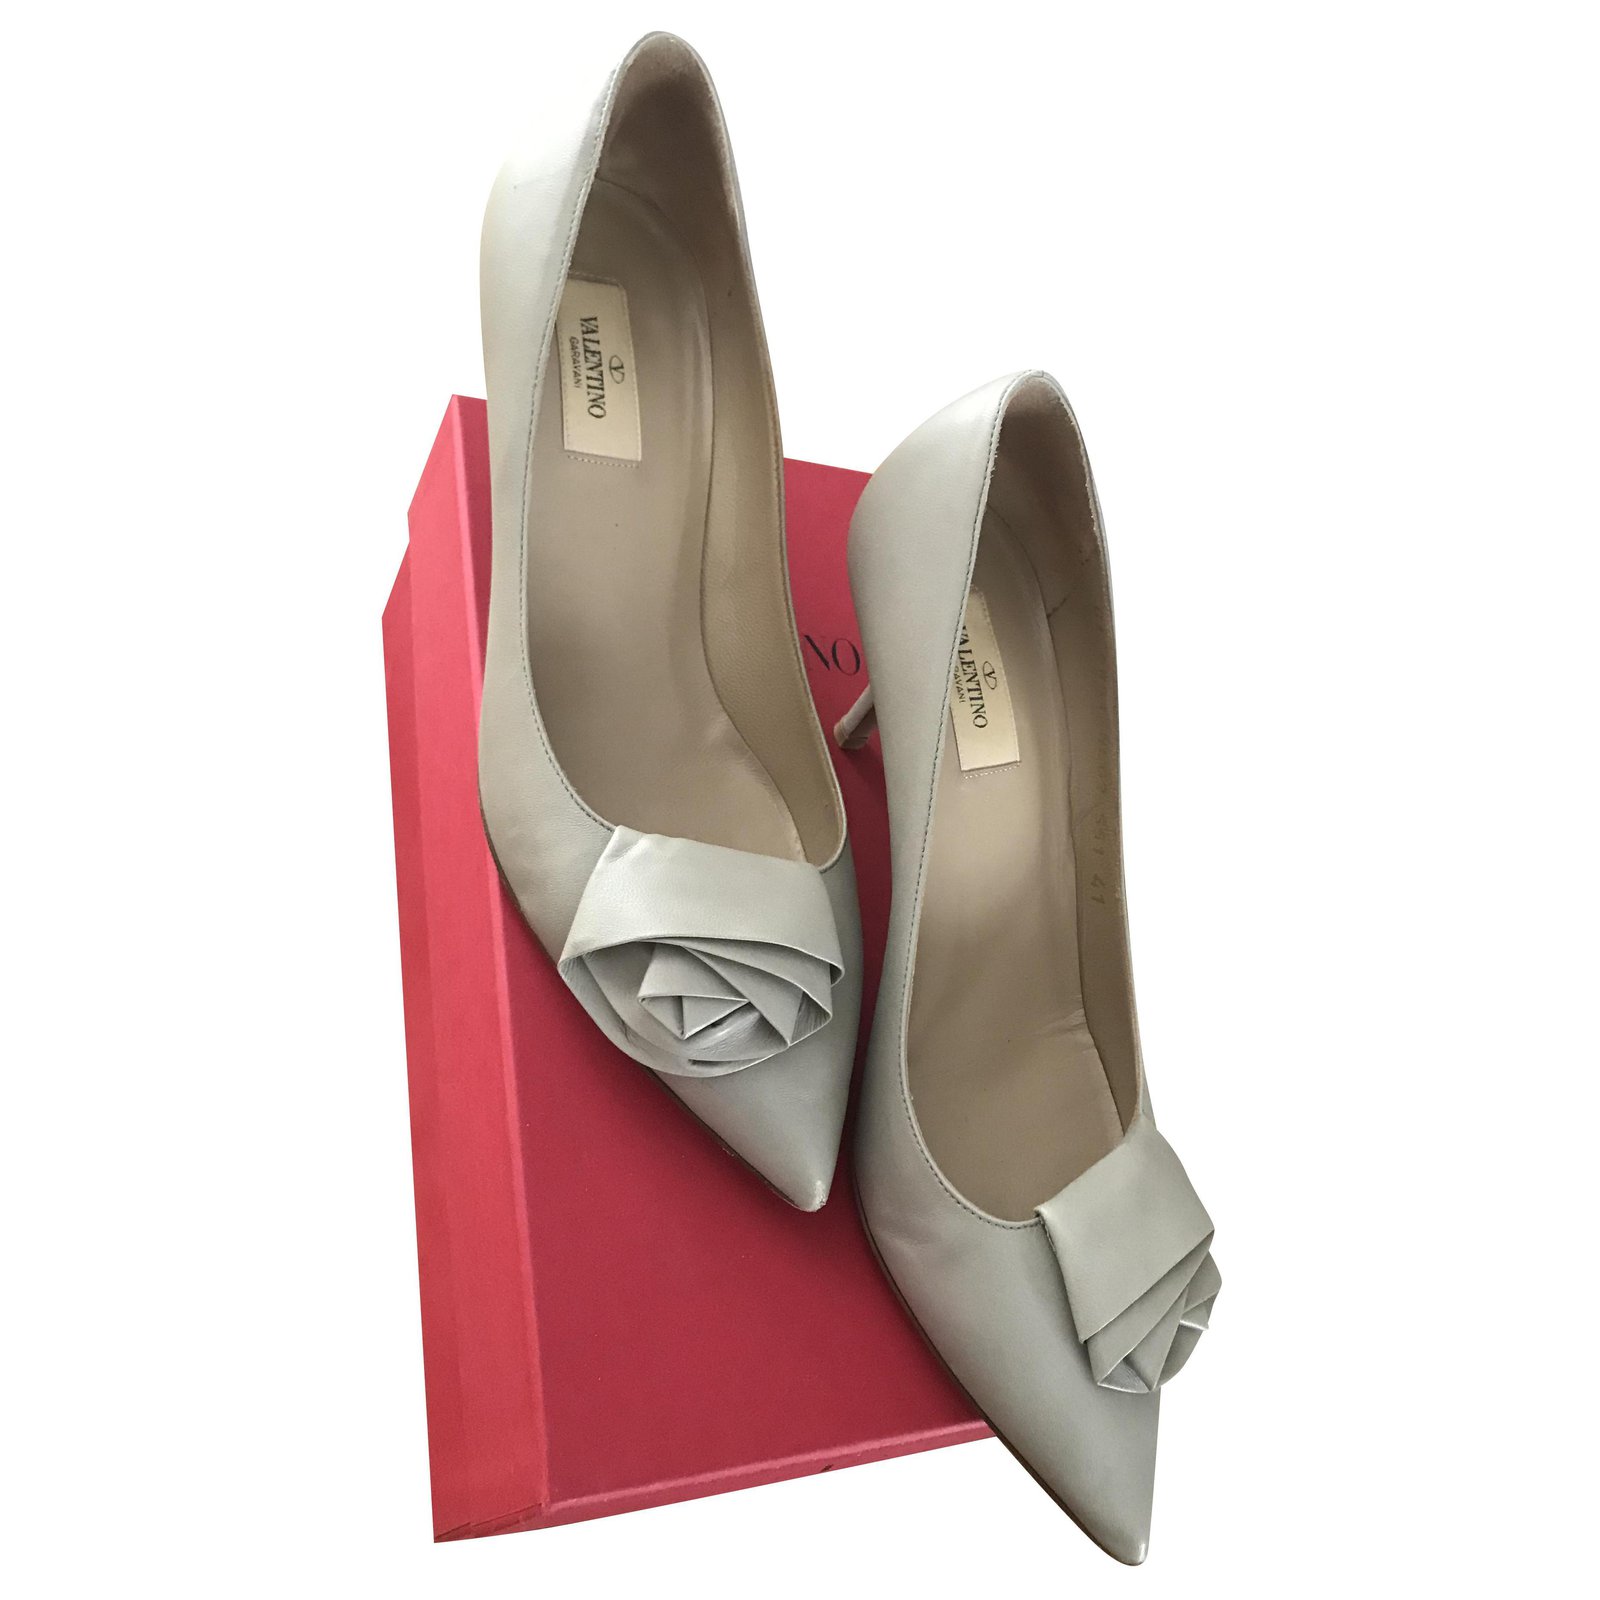 valentino red high heels